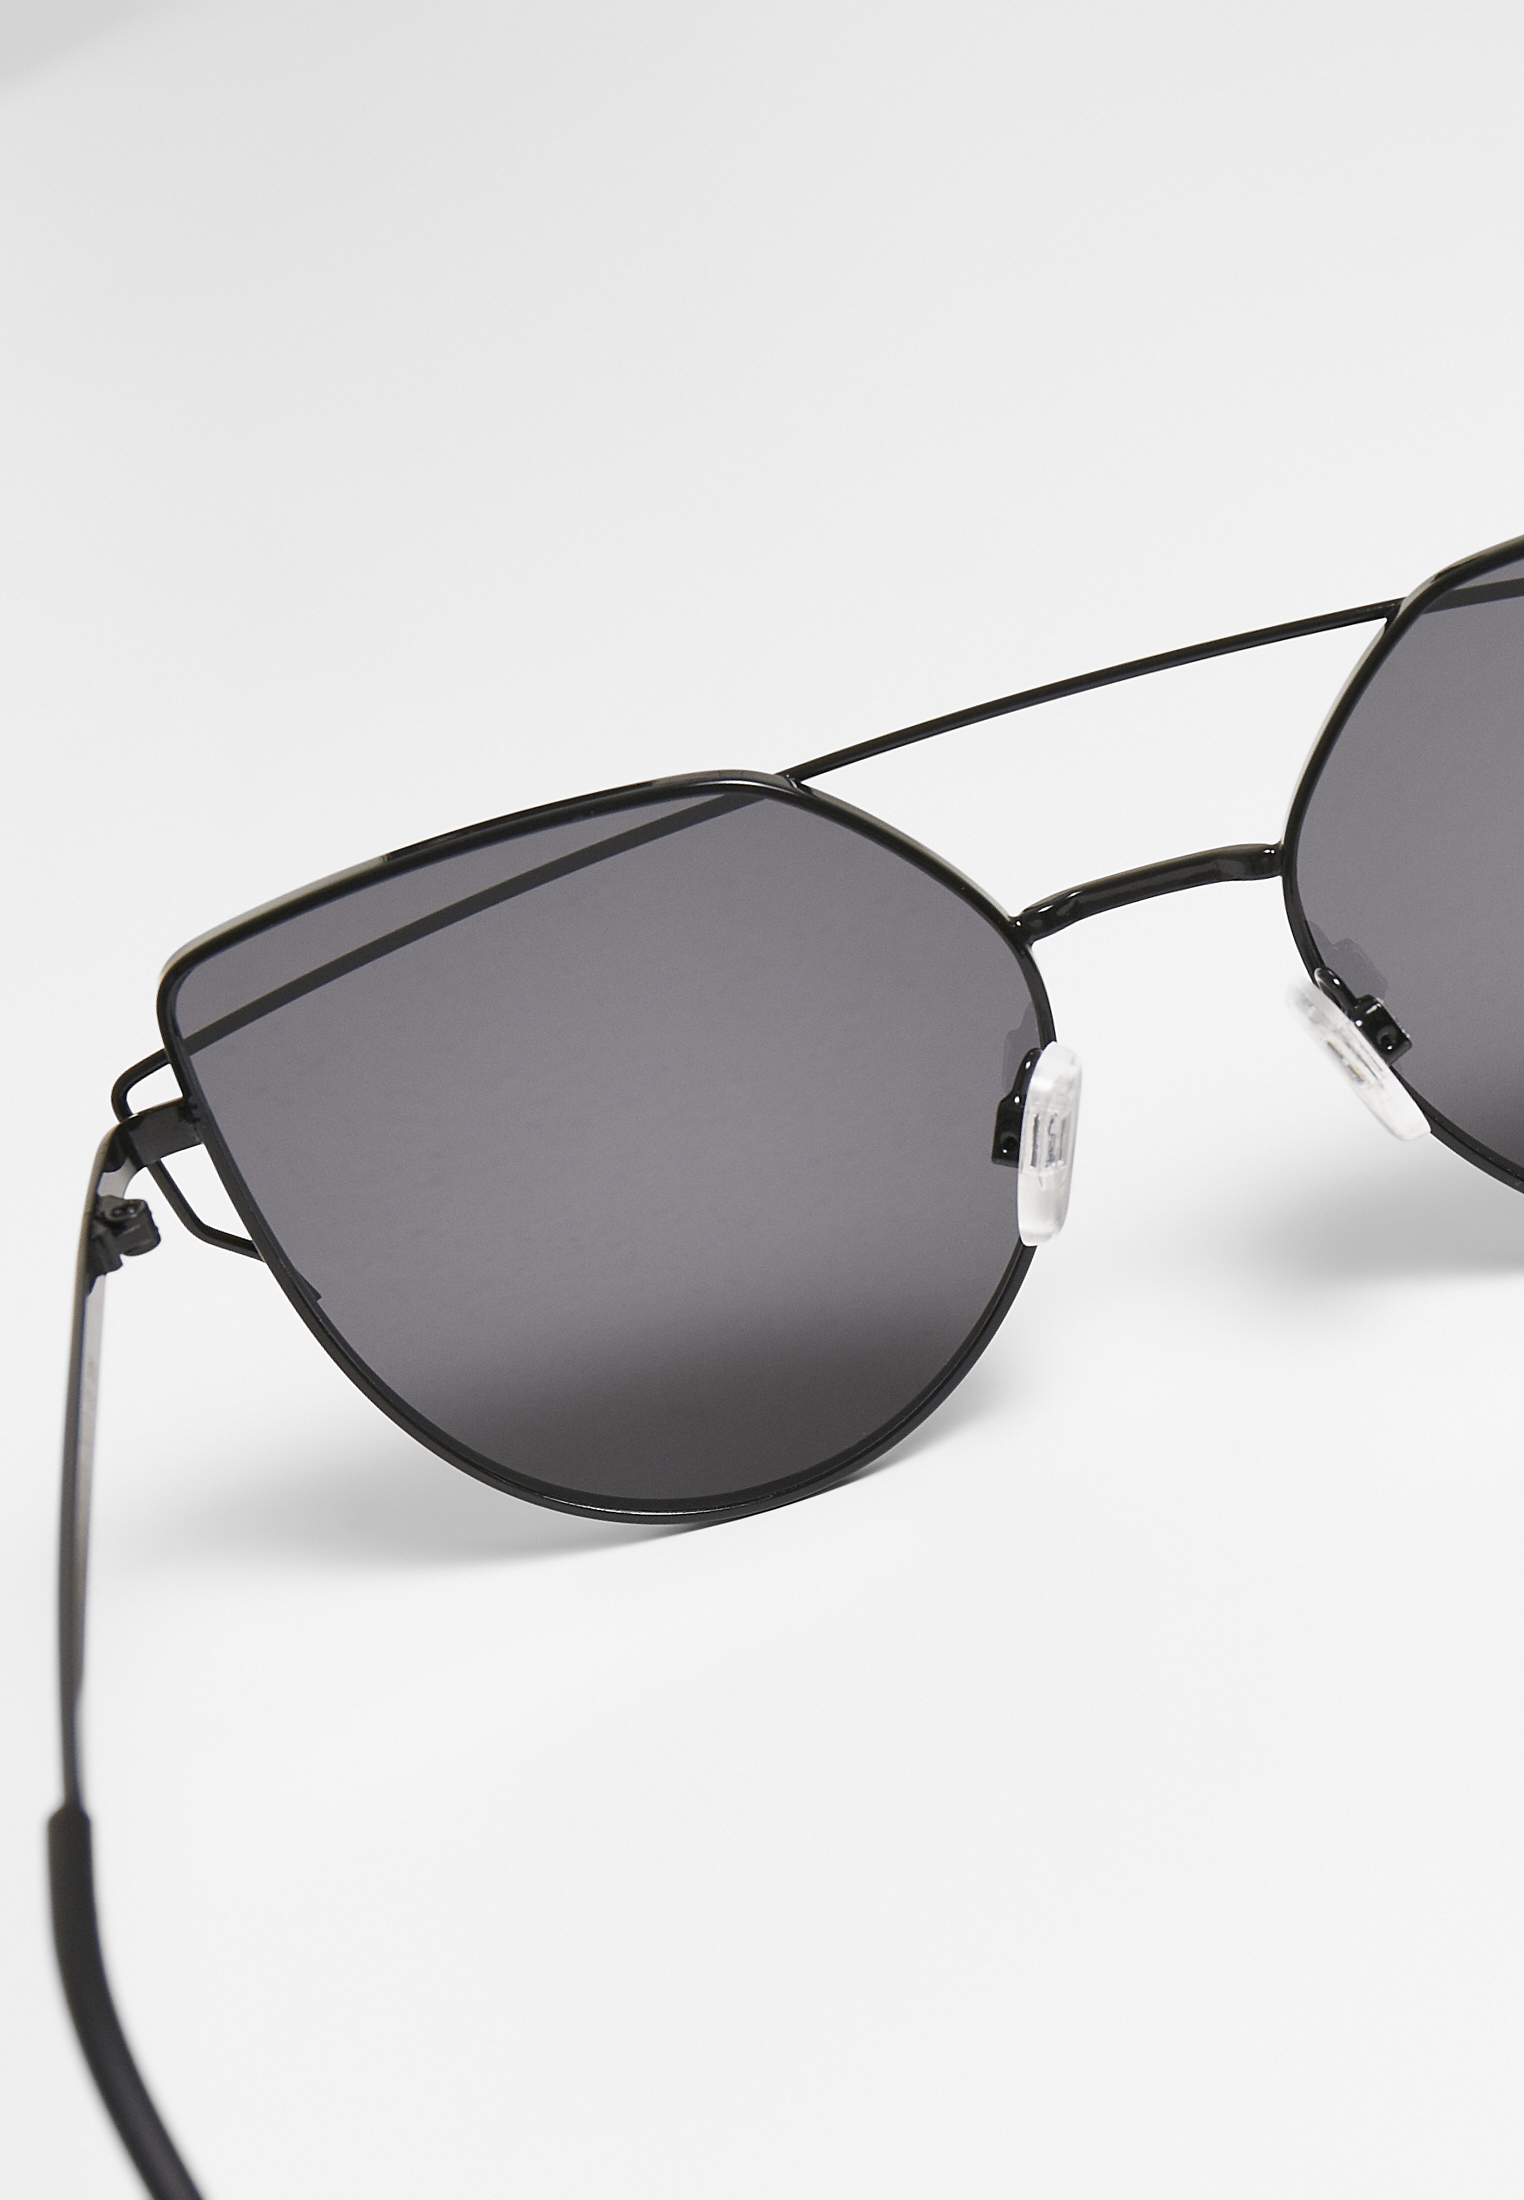 Sonnenbrillen Sunglasses July UC in Farbe black